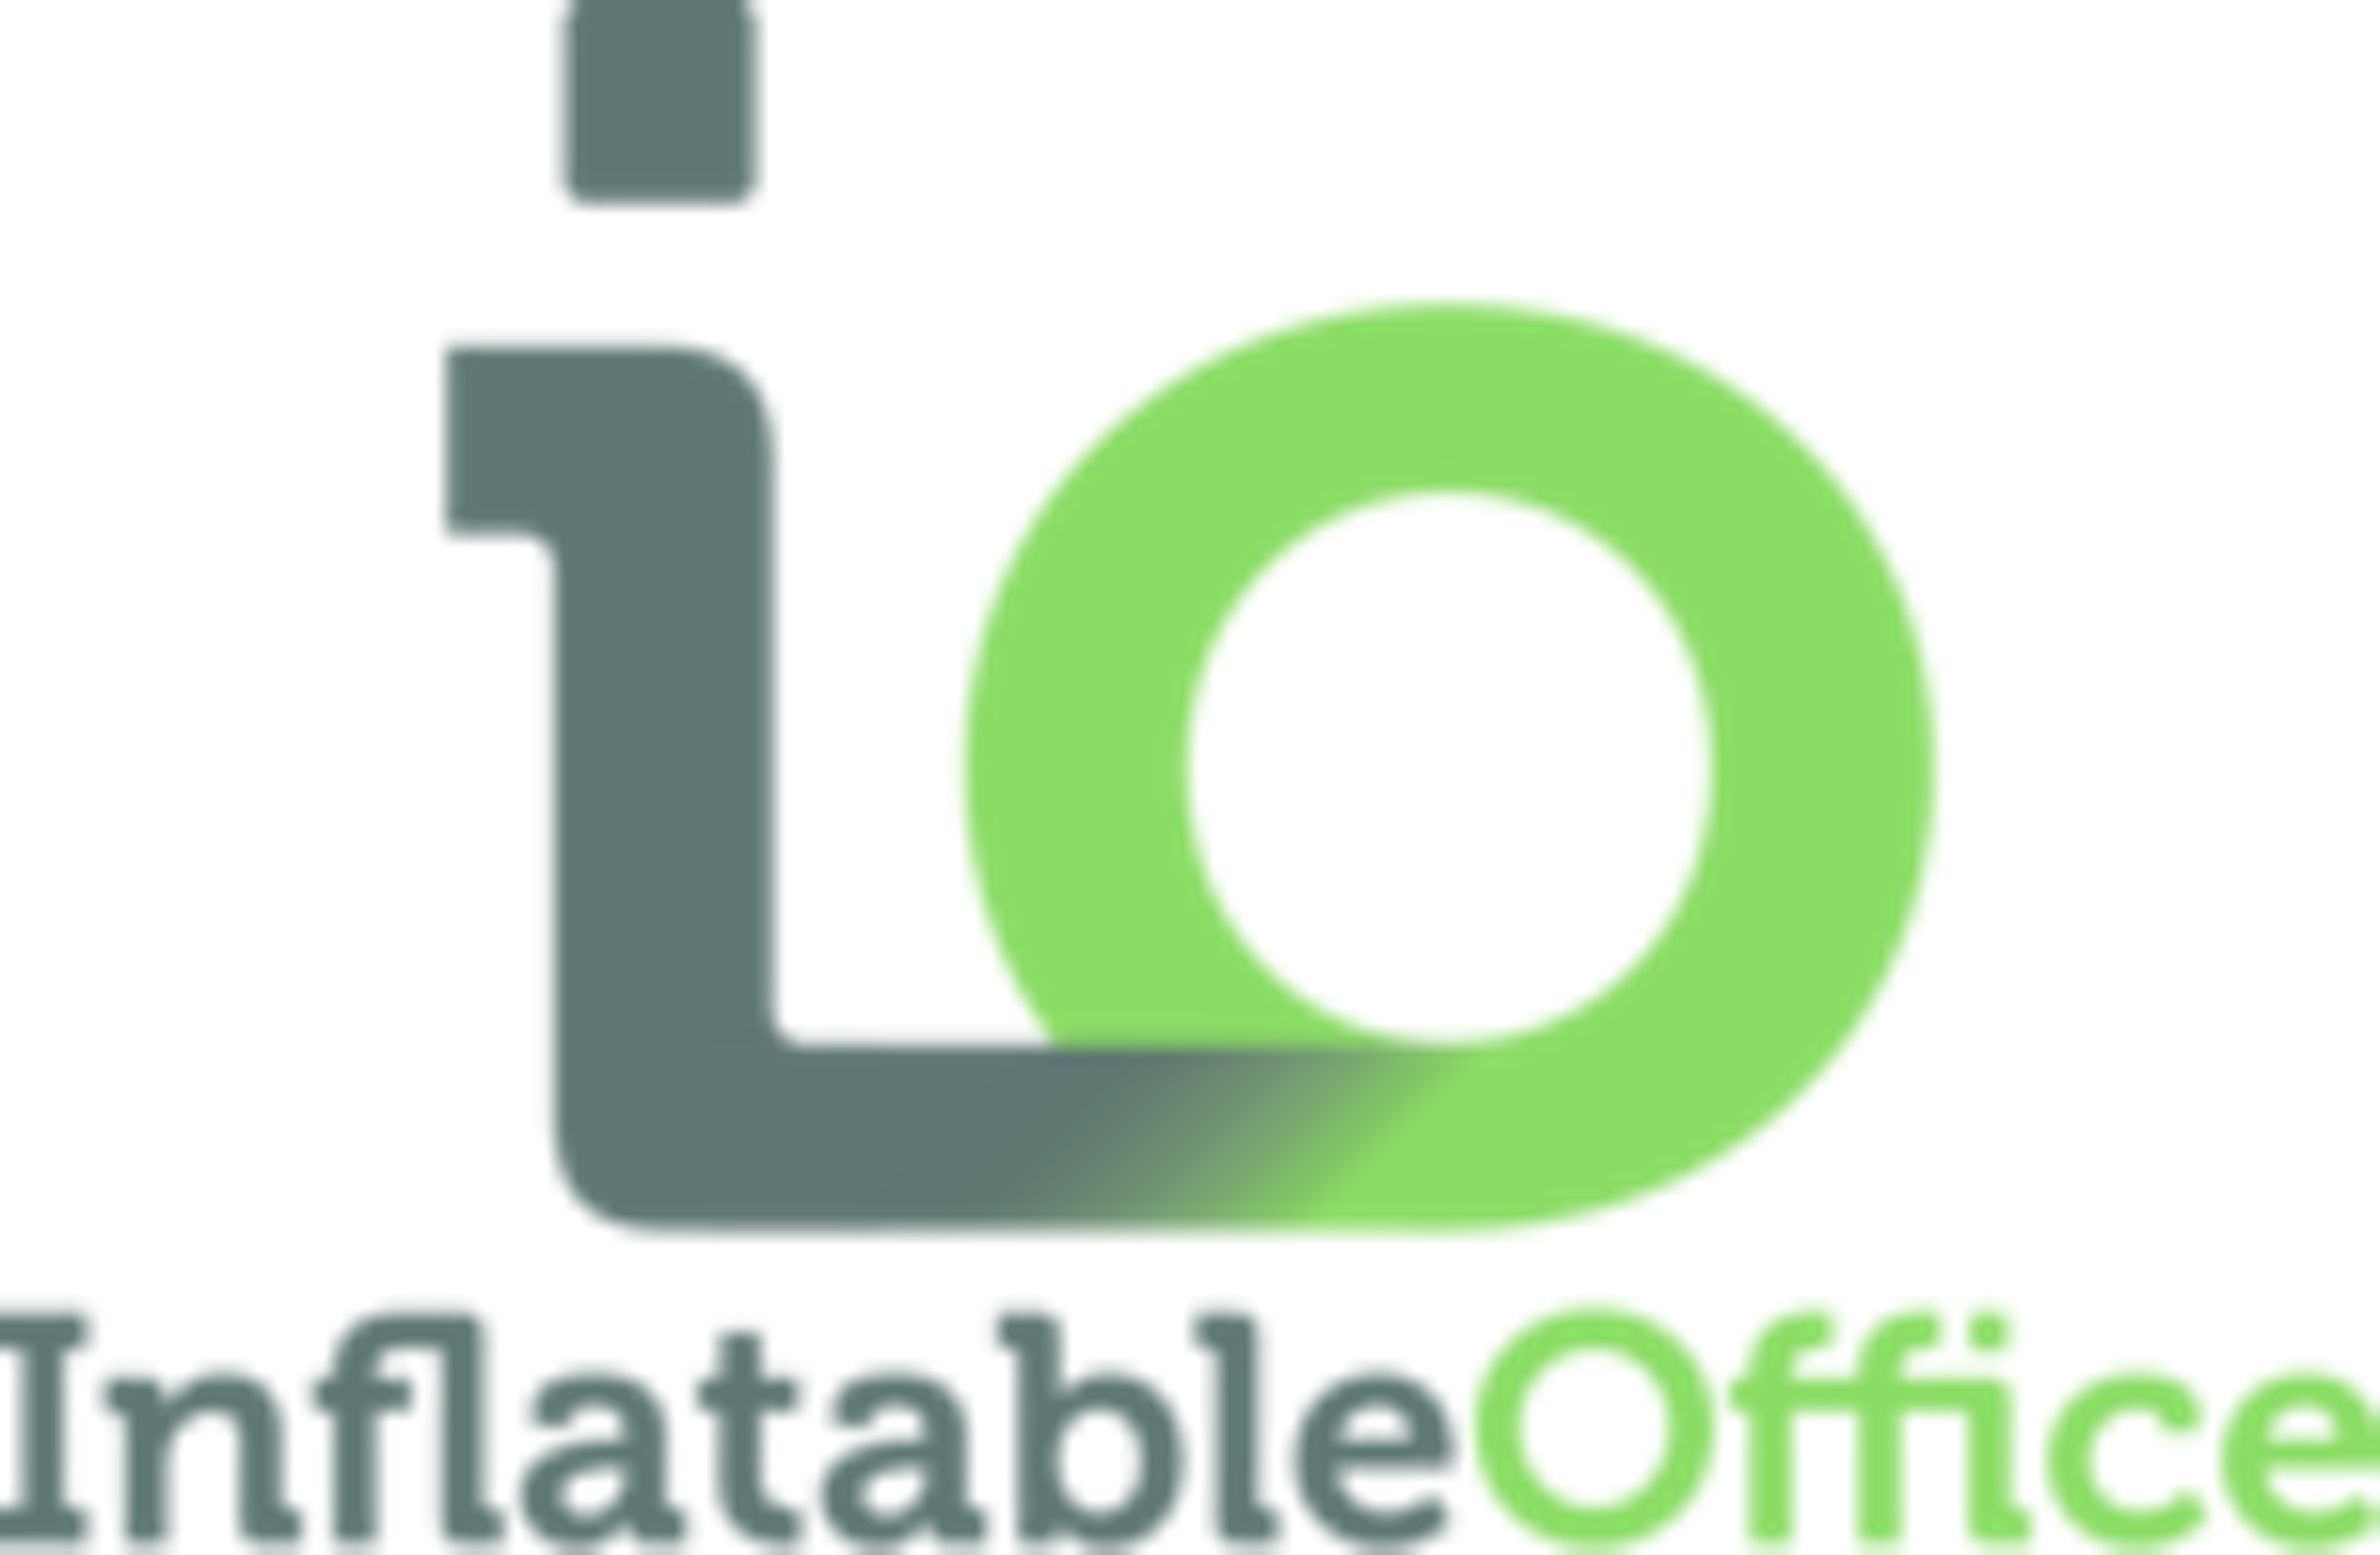 InflatableOffice Logo